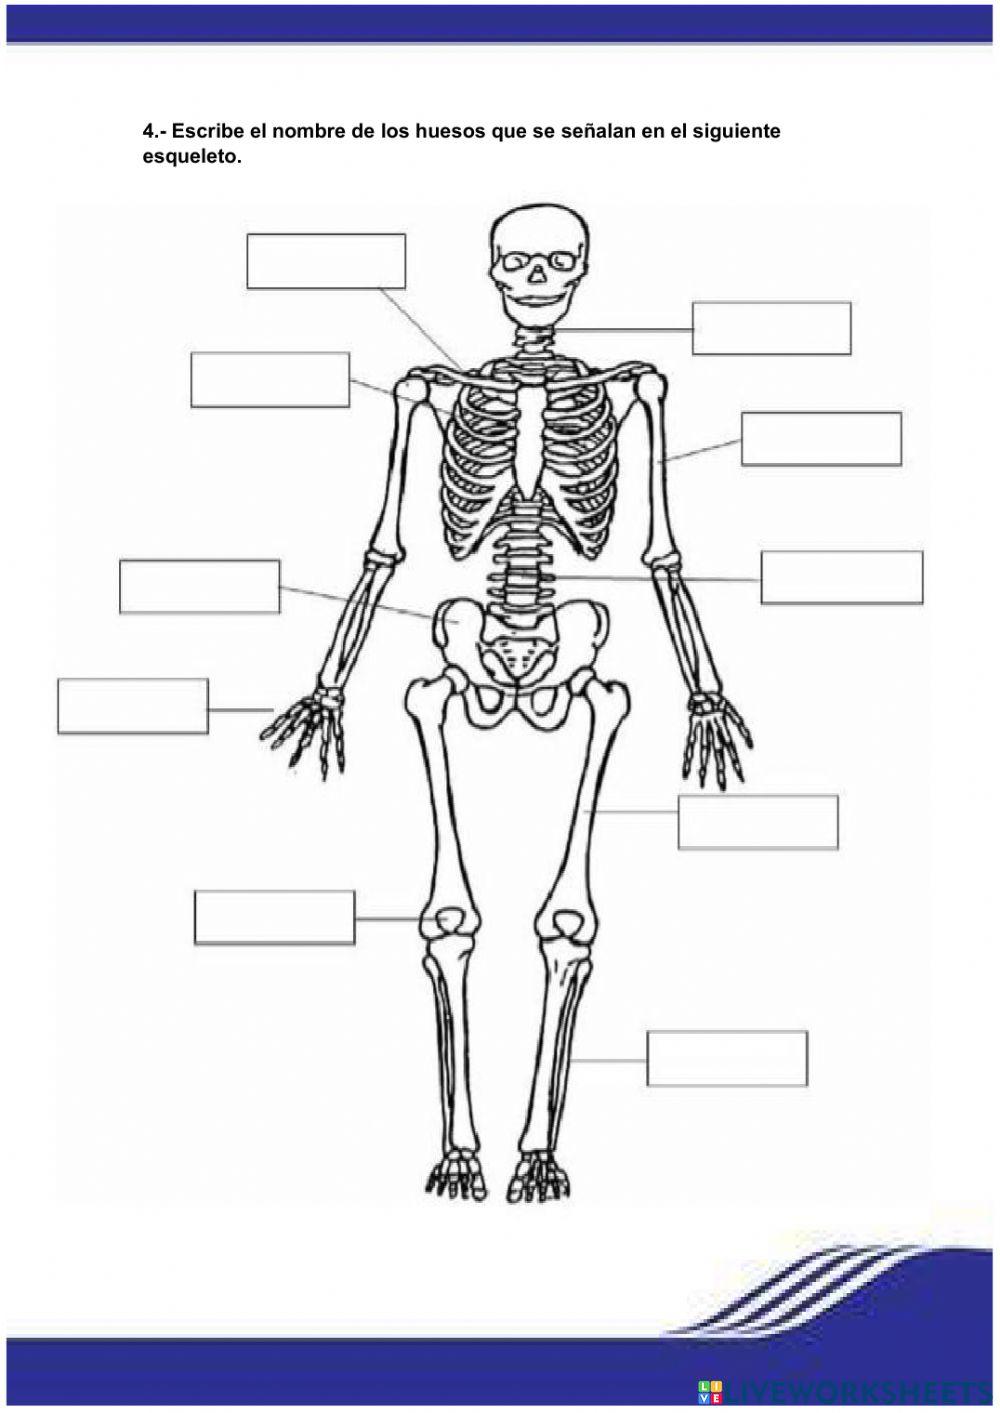 Sistema locomotor, s. muscular, s. óseo